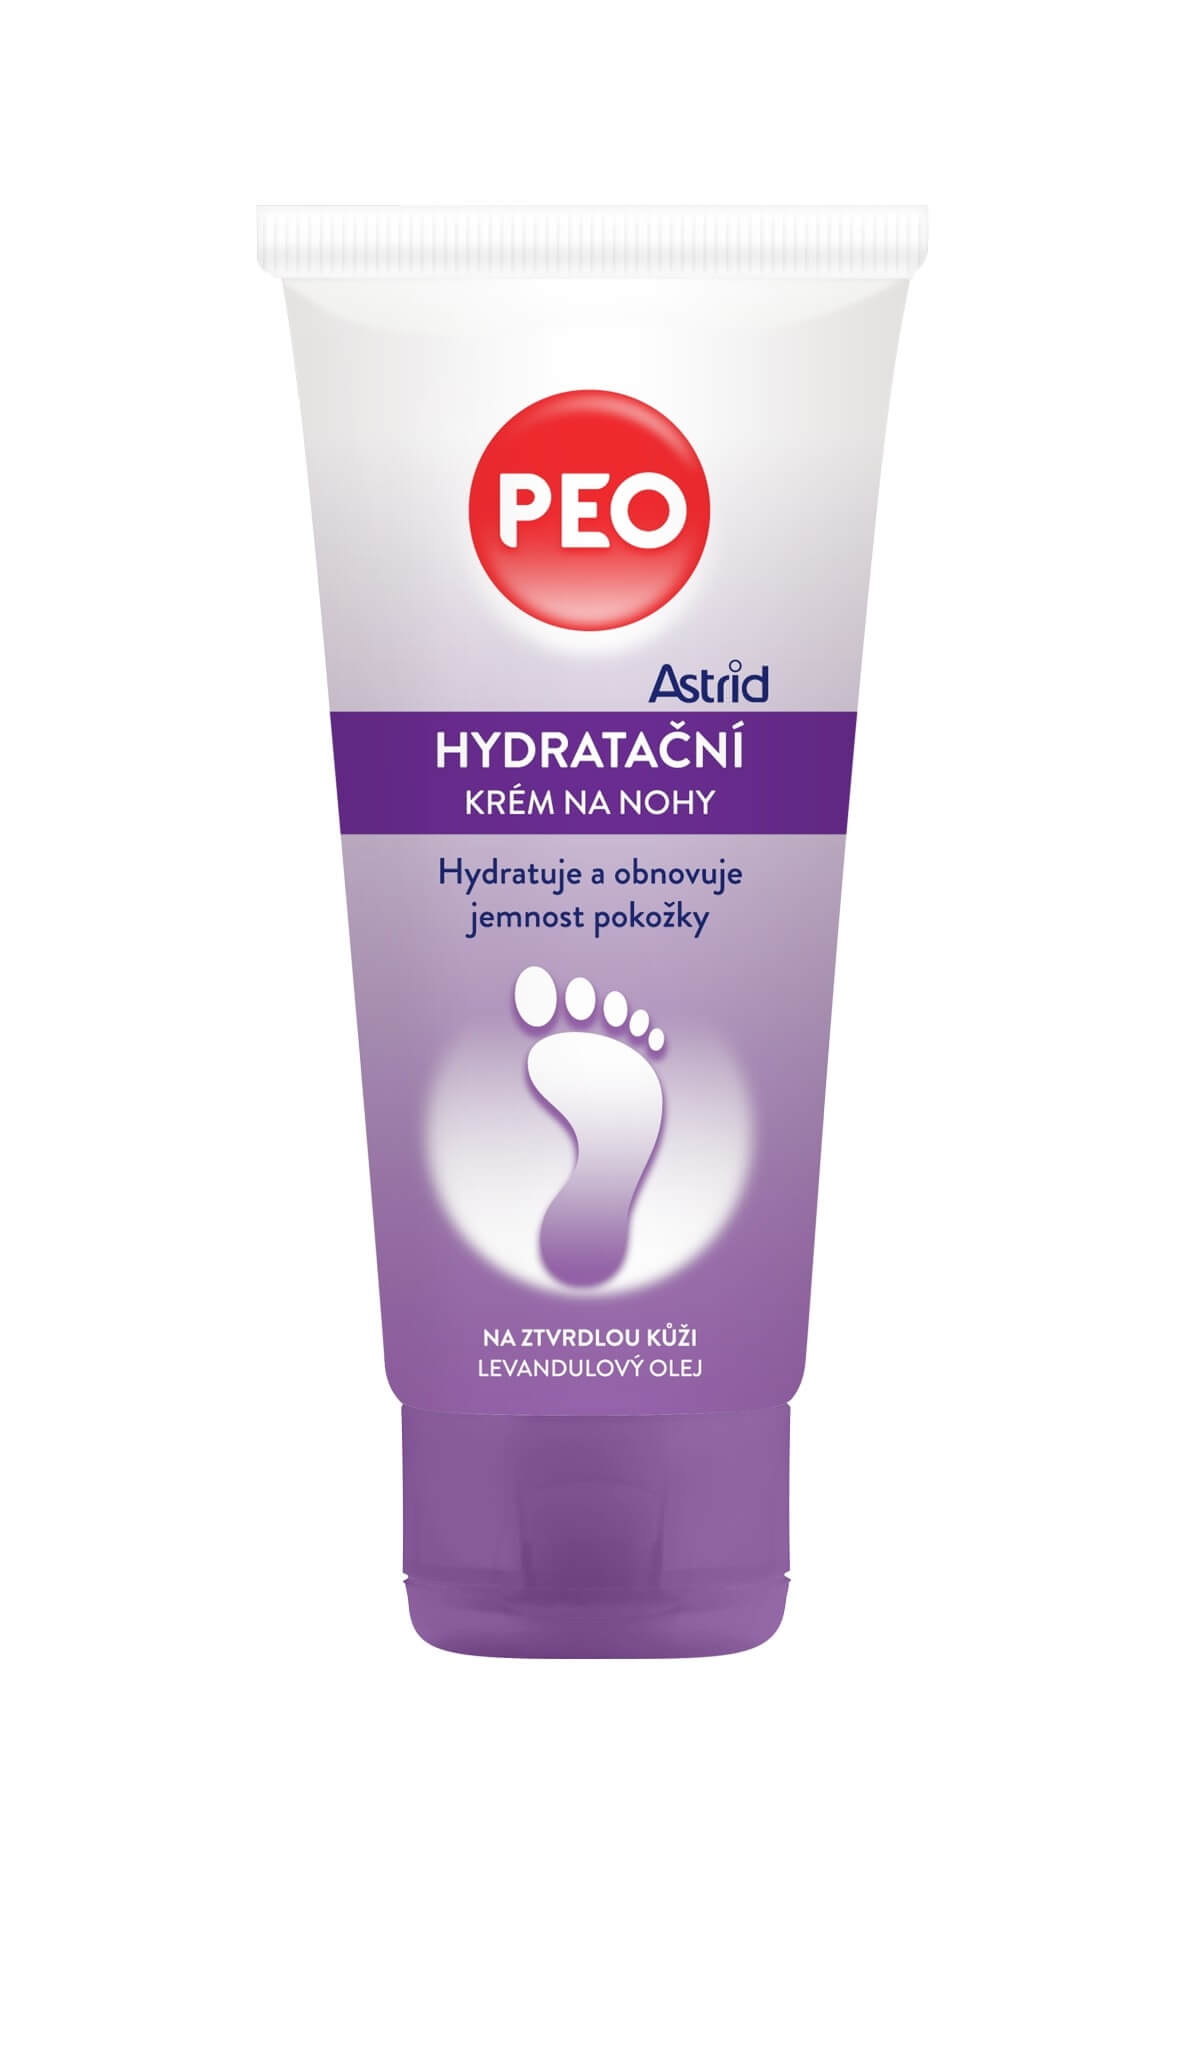 Astrid Hydratační krém na nohy PEO 100 ml